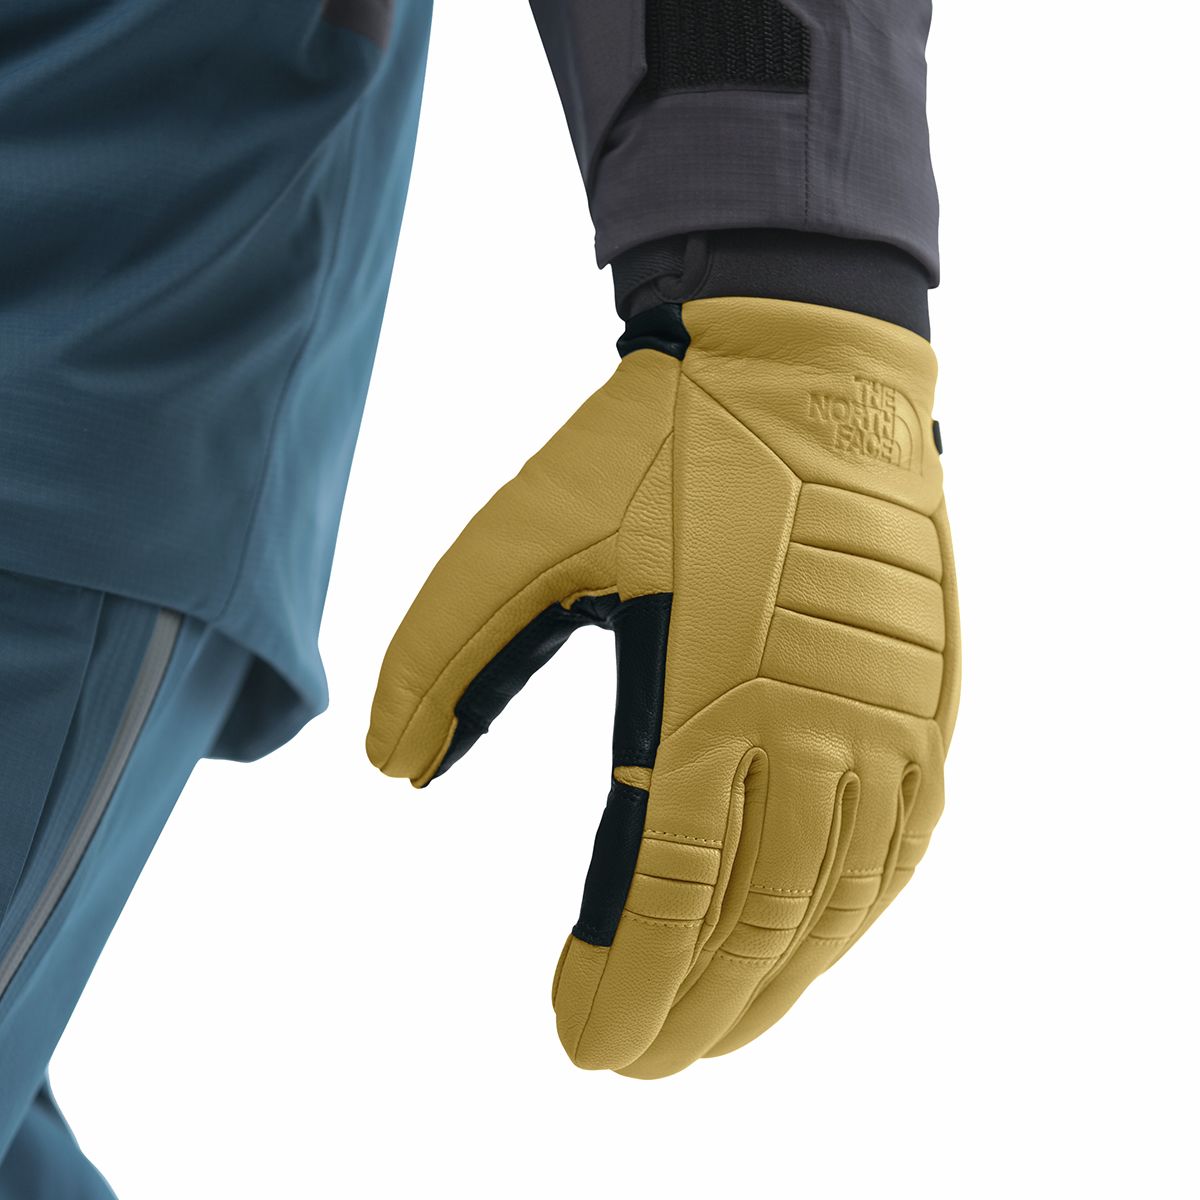 The North Face Steep Purist FUTURELIGHT Glove - Accessories